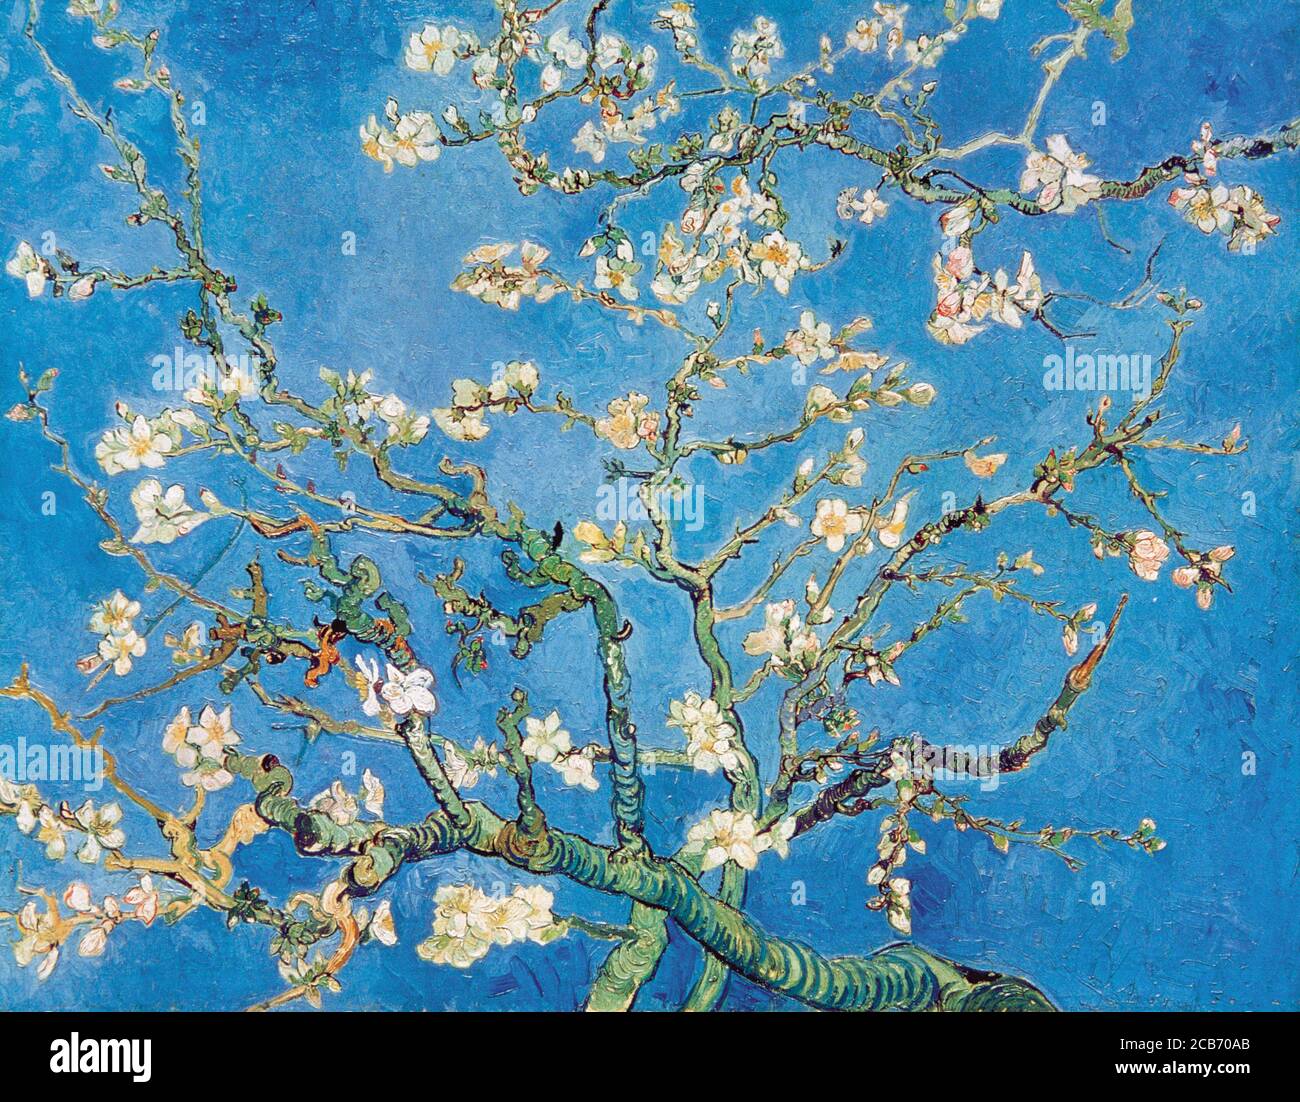 Vincent van Gogh (1853-1890). Dutch post-impressionist painter. Almond Blossom, 1890. Oil on canvas (73,3 cm x 92,4 cm). Van Gogh Museum. Amsterdam, Netherlands. Stock Photo